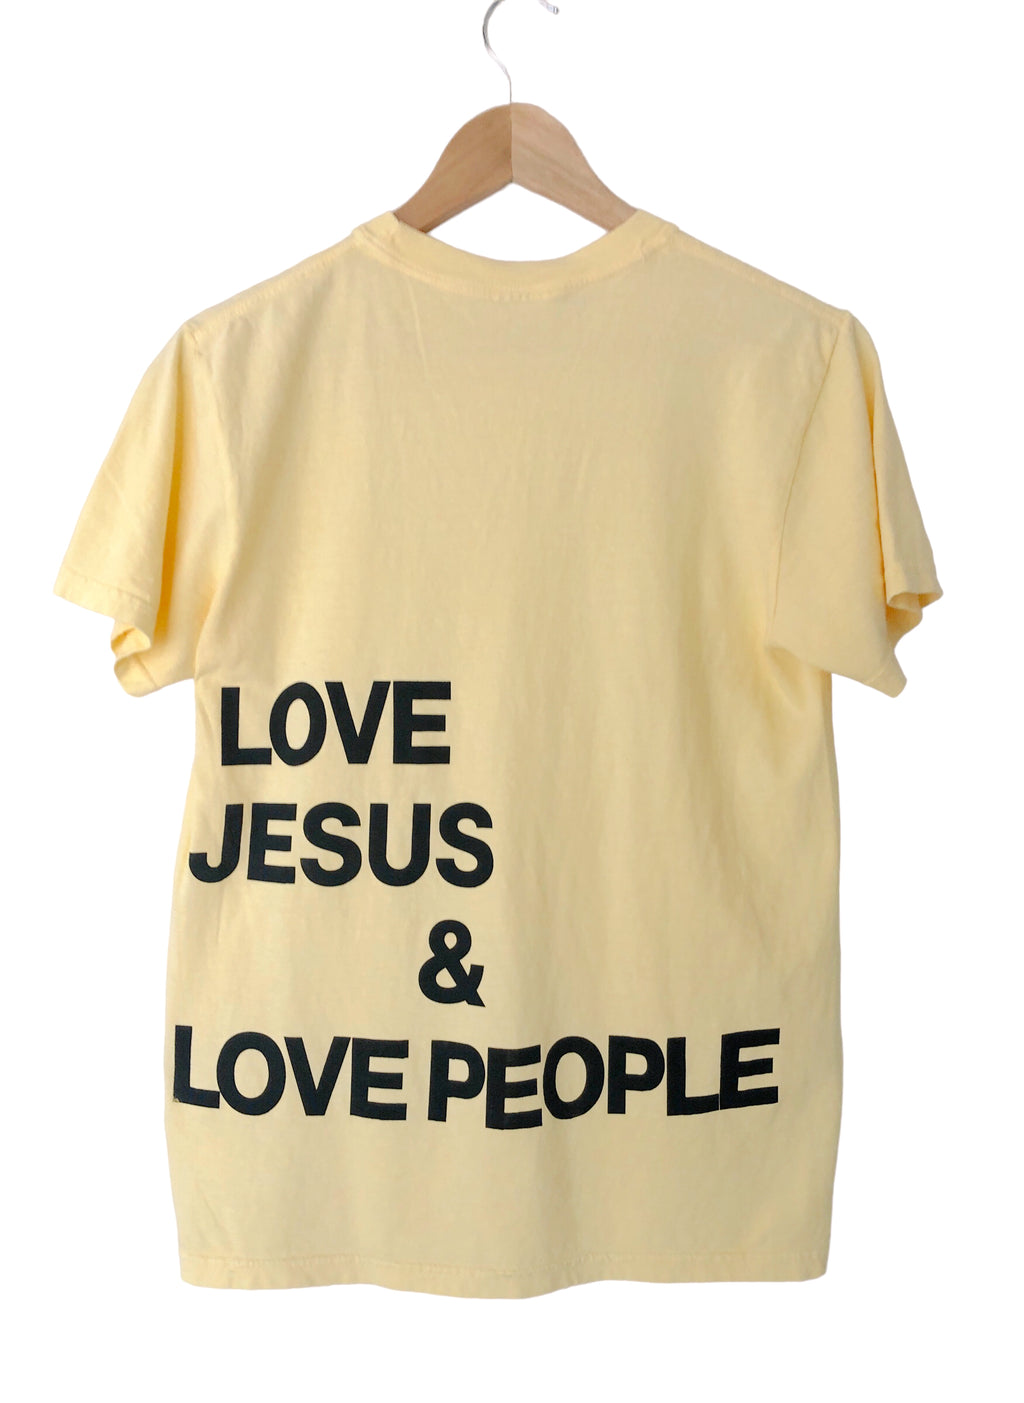 LOVE JESUS & LOVE PEOPLE BUTTER SLEEVE T-SHIRT